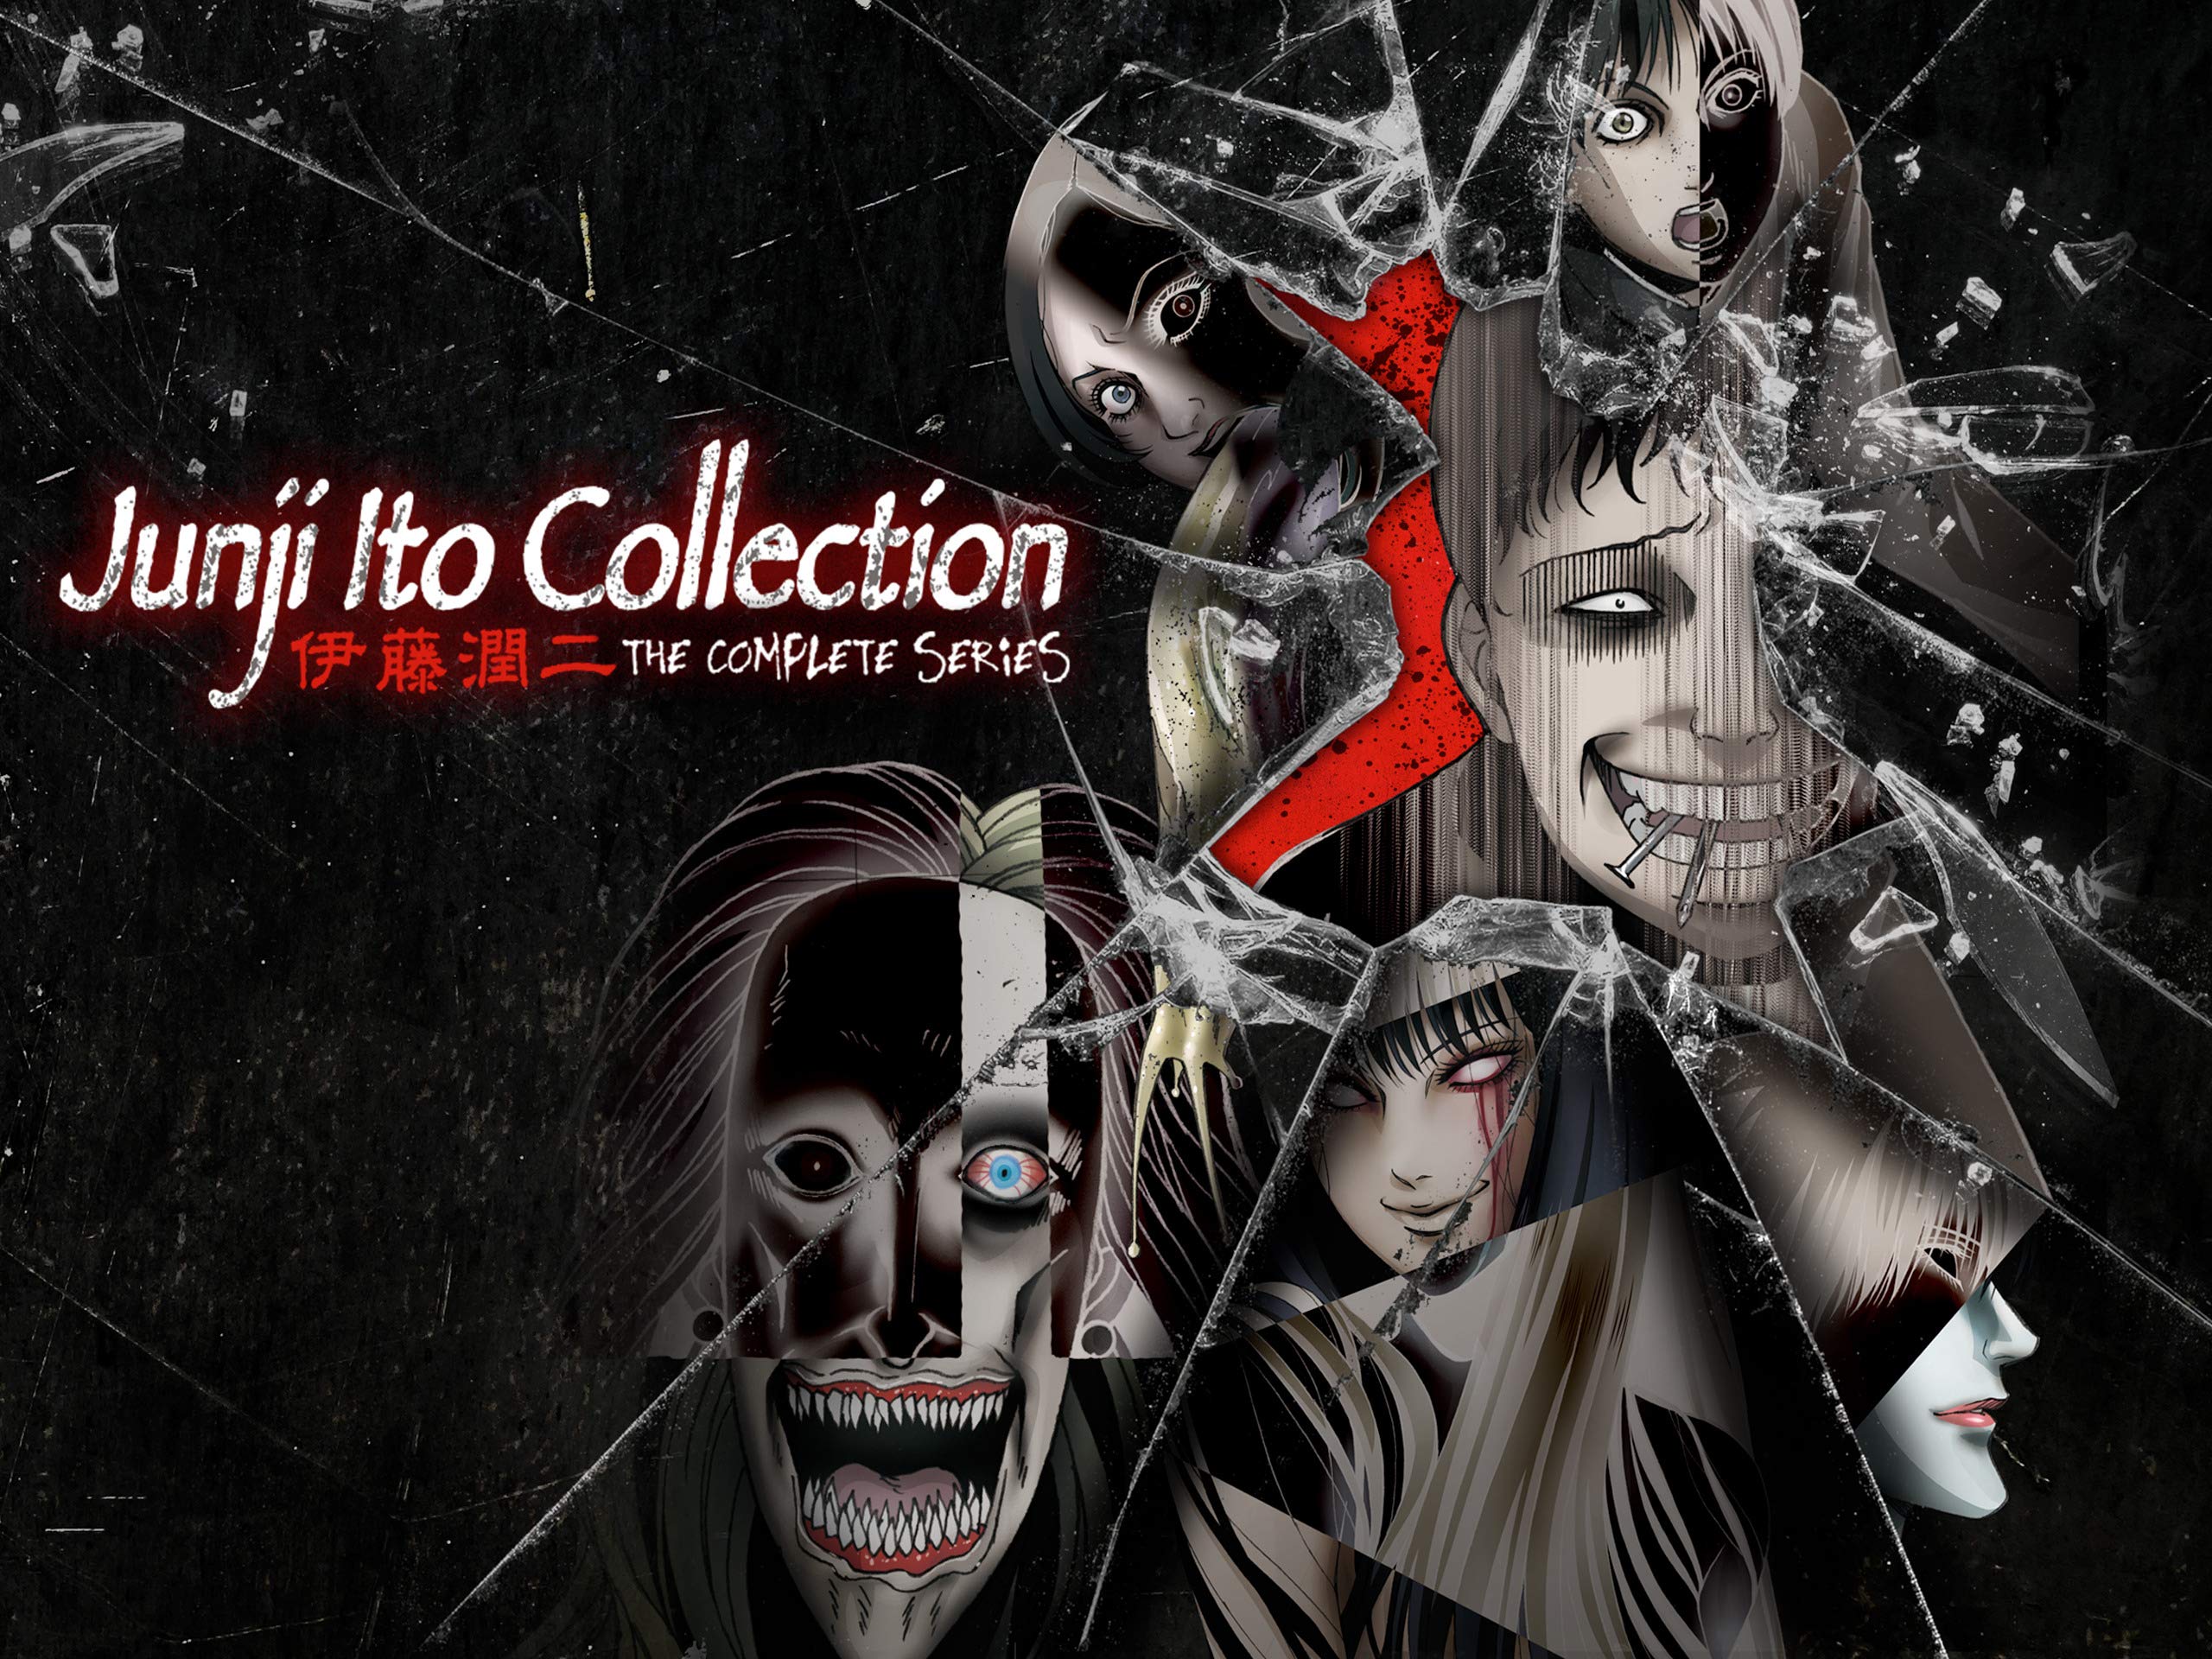 Watch Junji Ito Collection